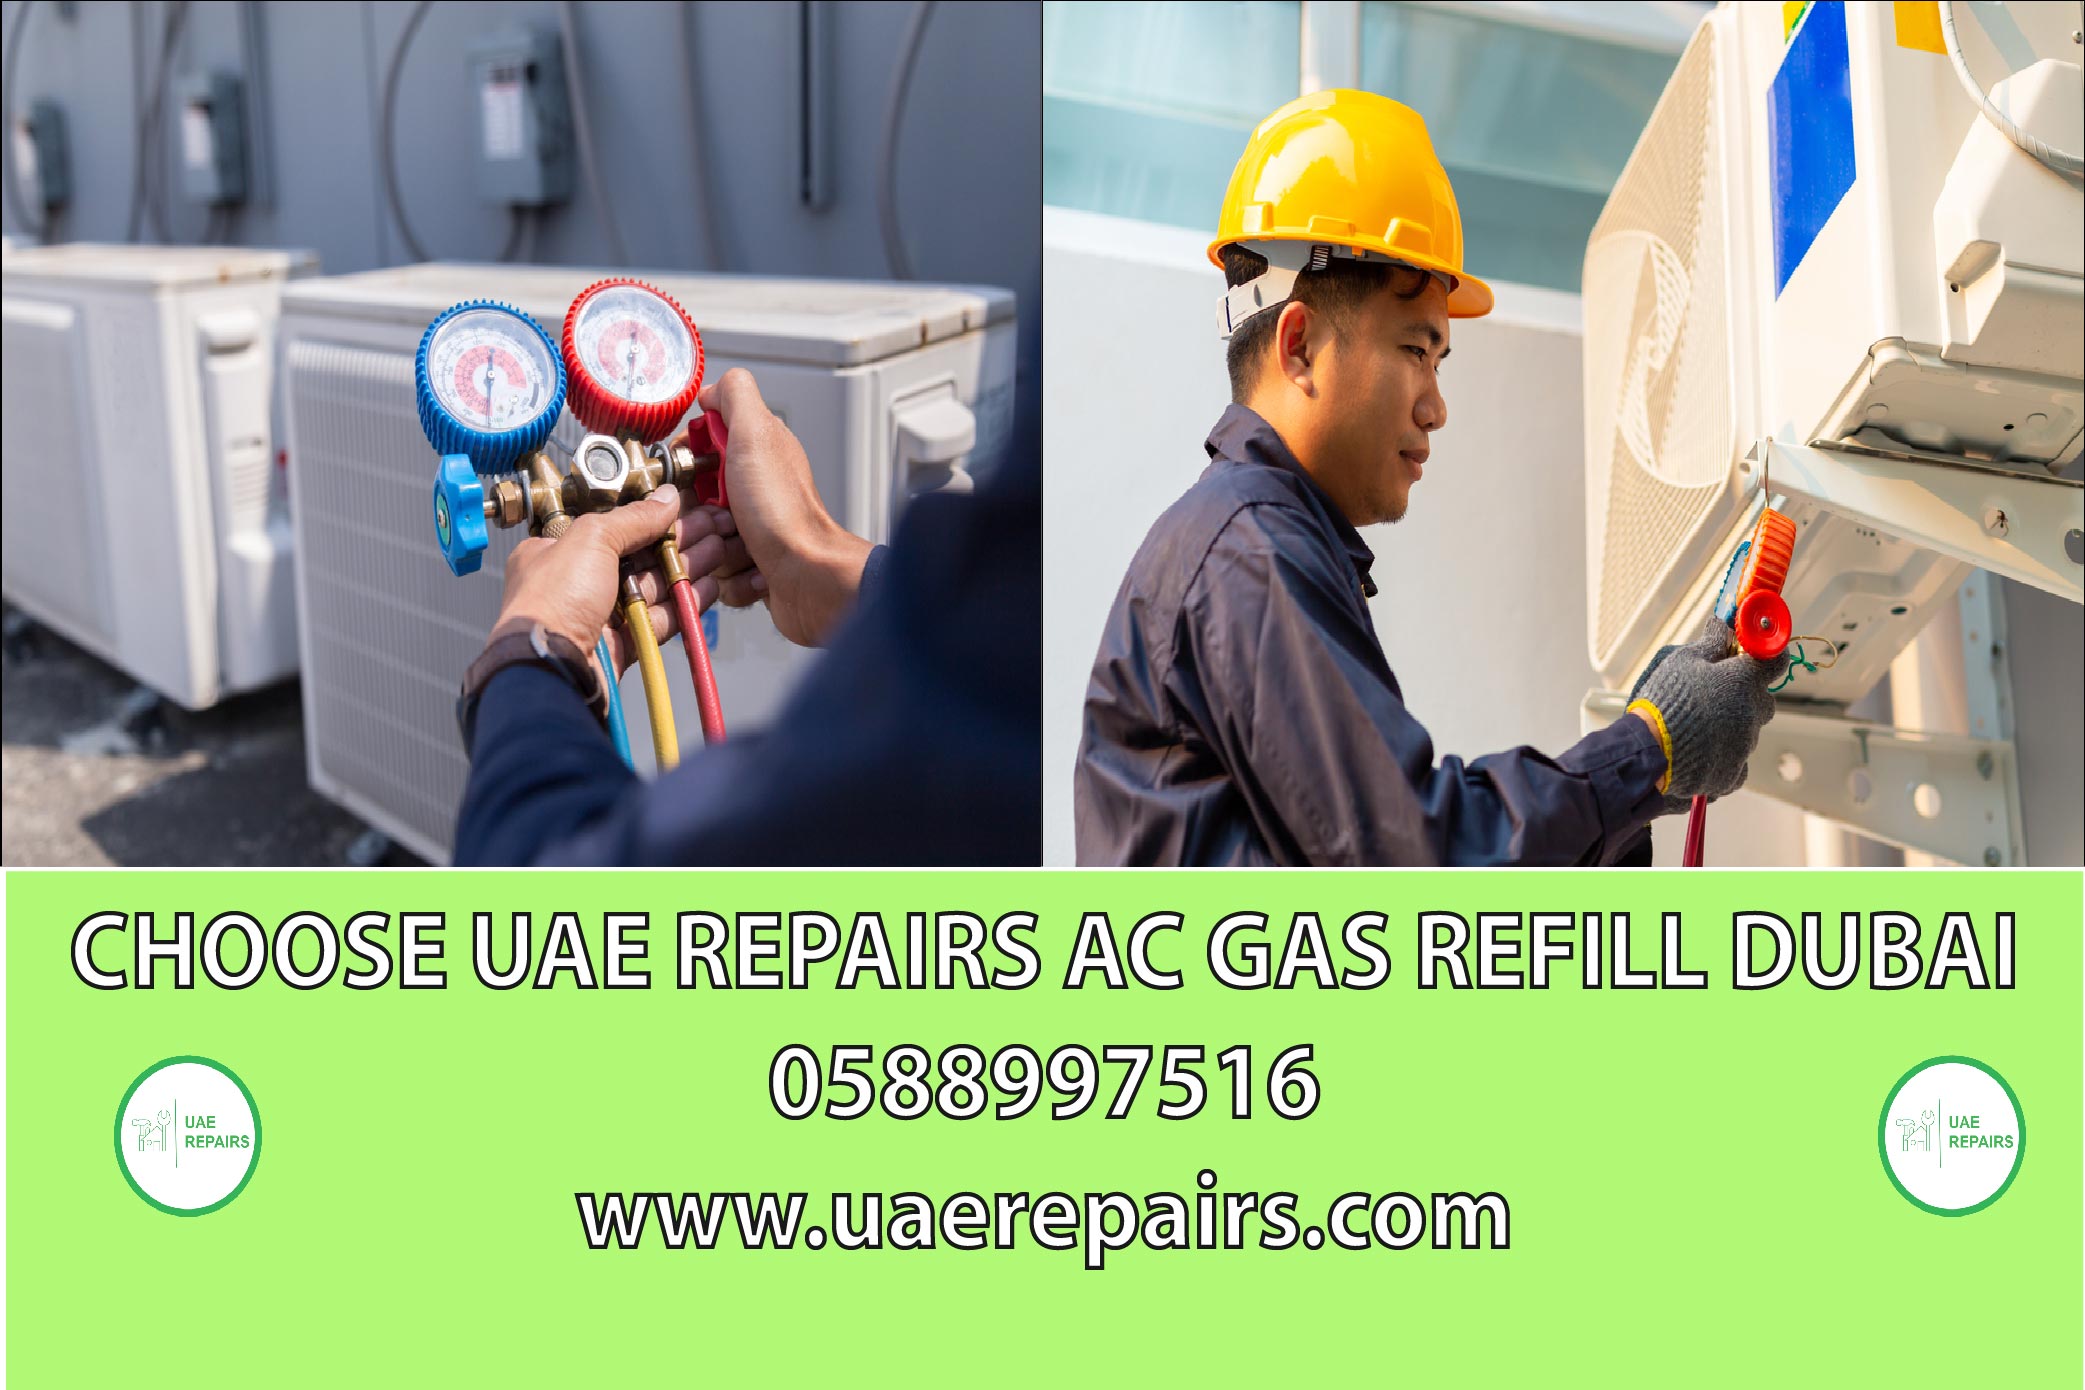 CHOOSE US FOR AC GAS REFILL DUBAI CONTACT 0588997516